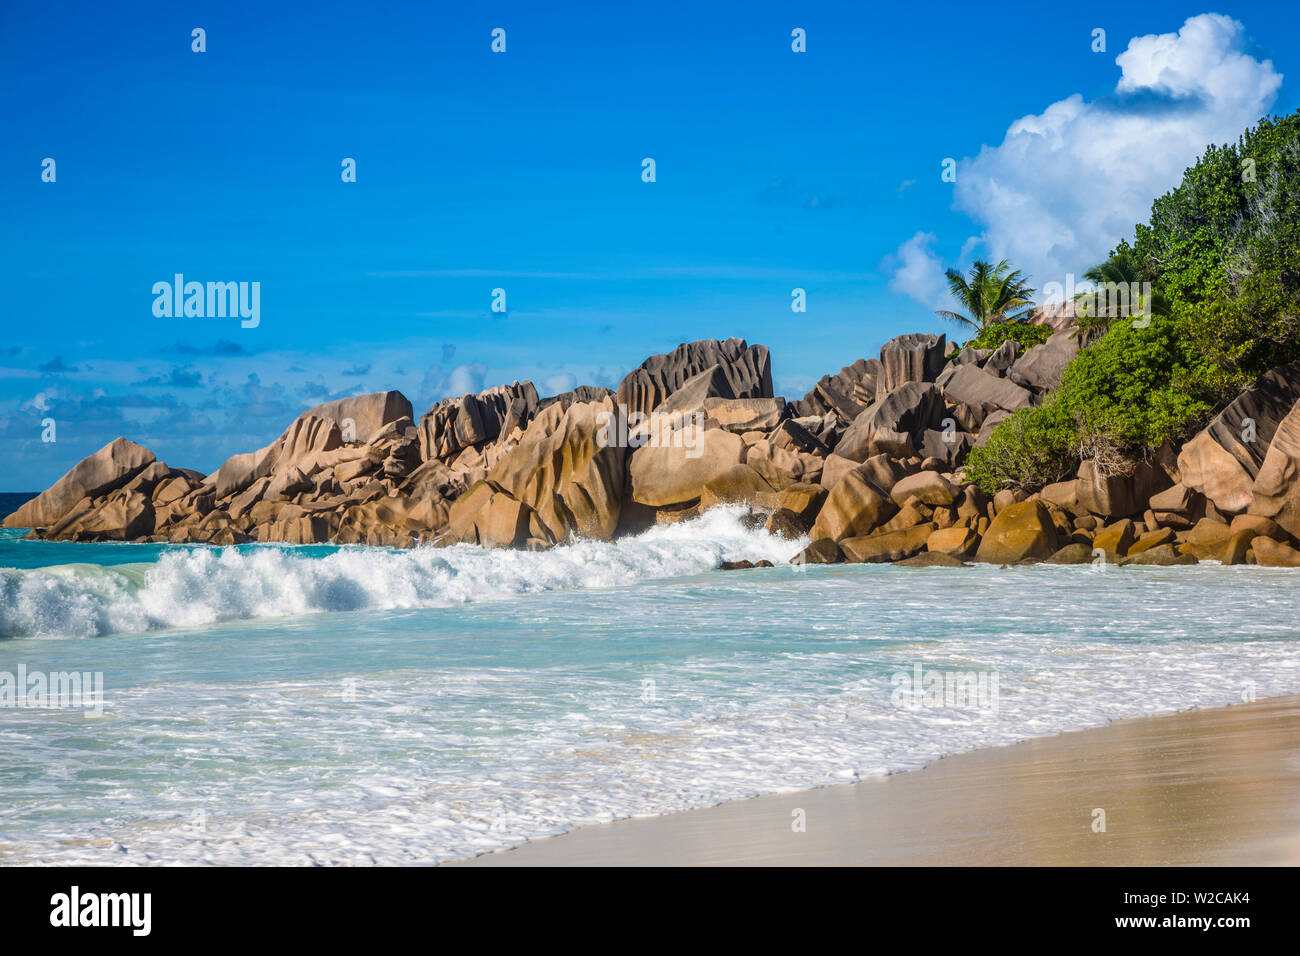 Petite Anse beach, La Digue, Seychelles Stock Photo